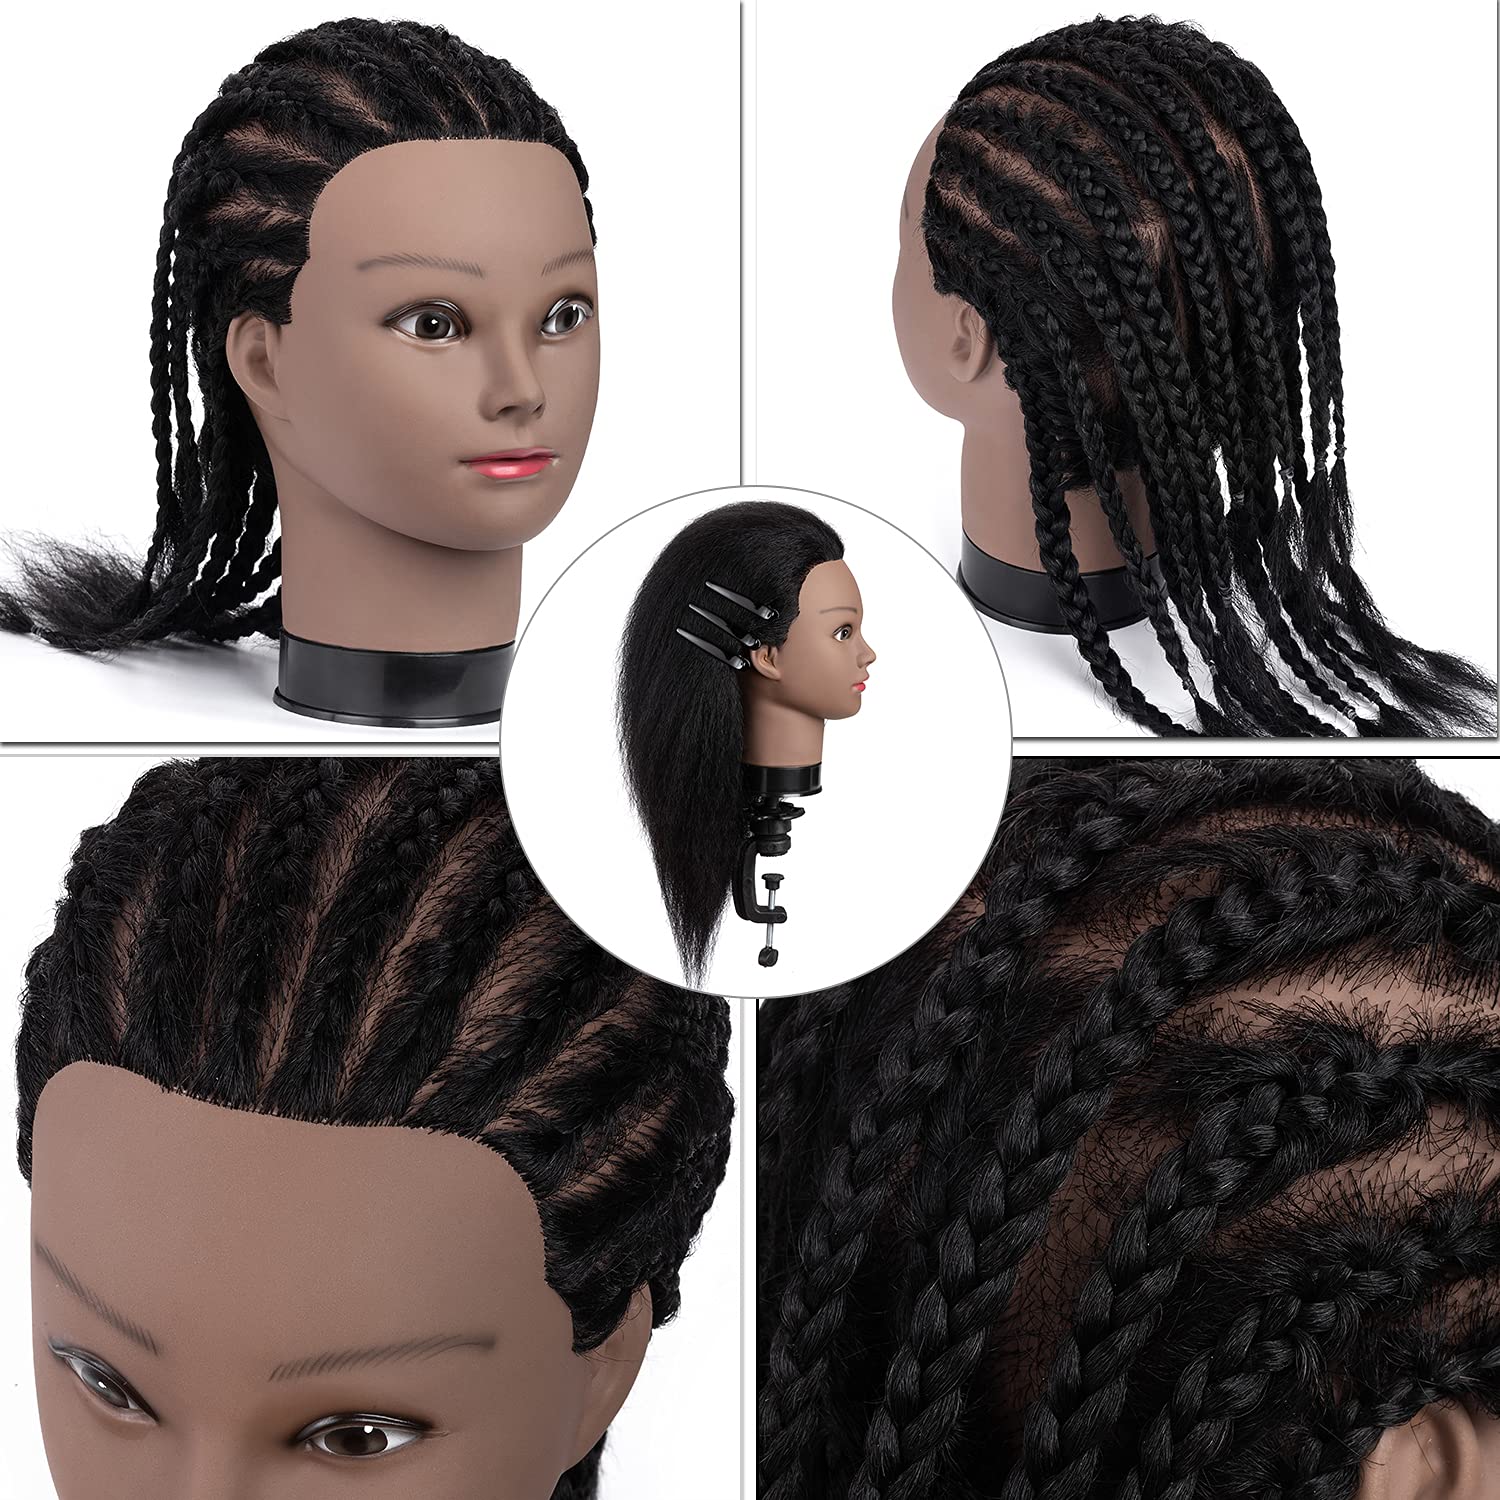 Learn to Braid Practice Braiding Mannequin Head for Hair Braiding